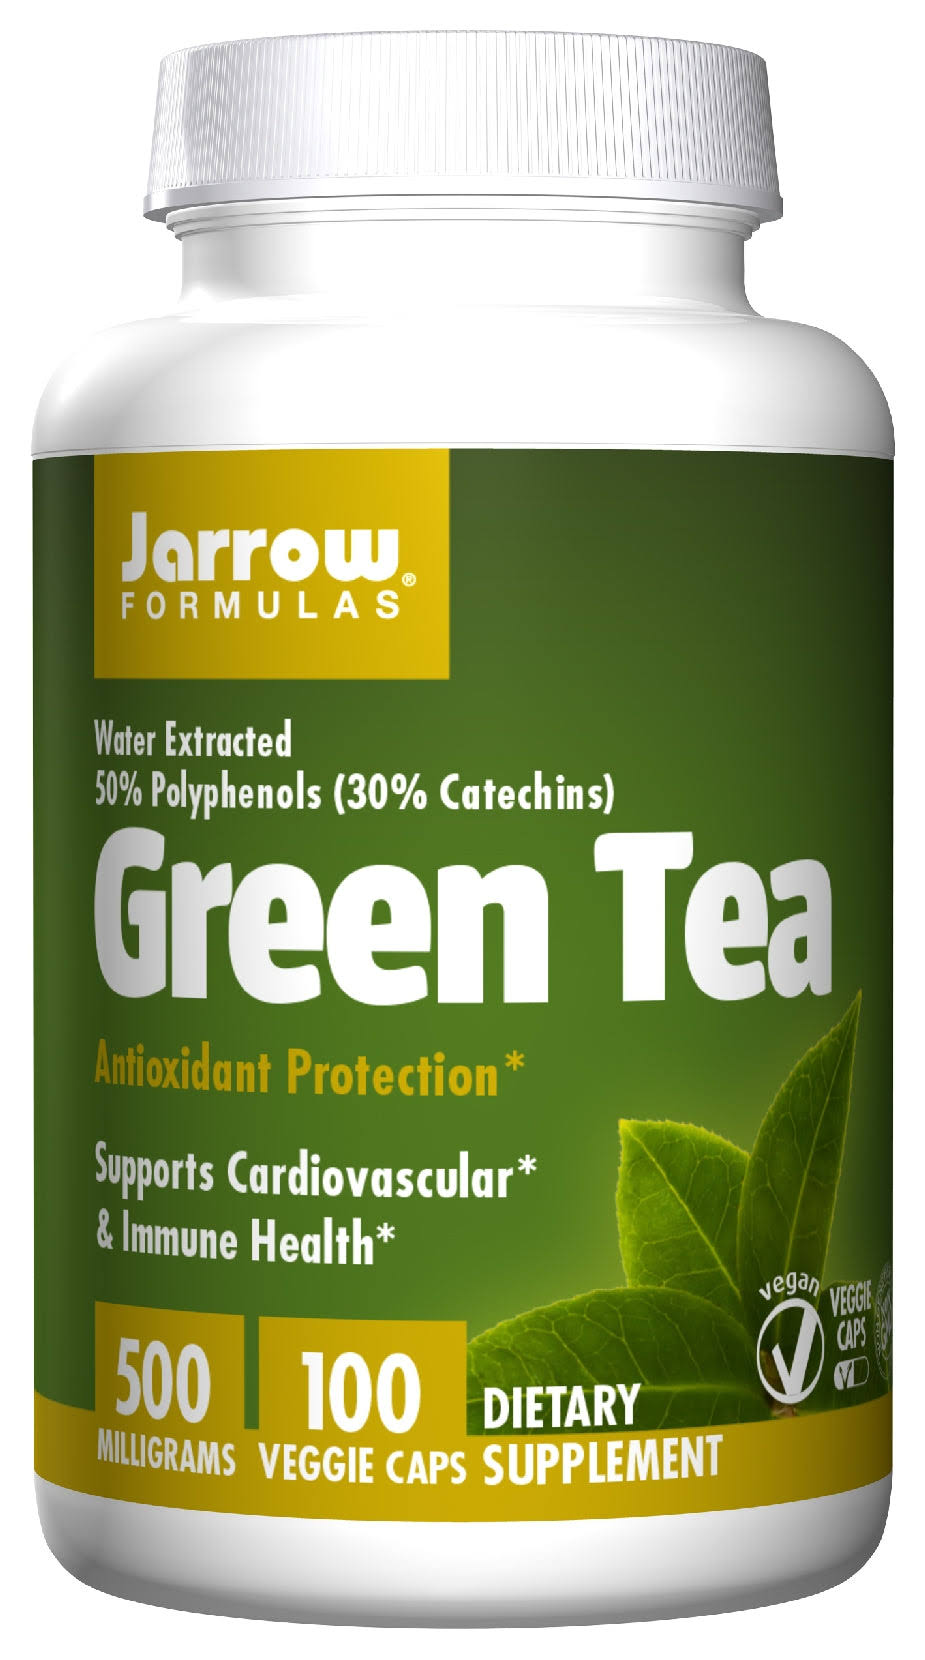 Jarrow Formulas Green Tea - 500mg, 100 Capsules